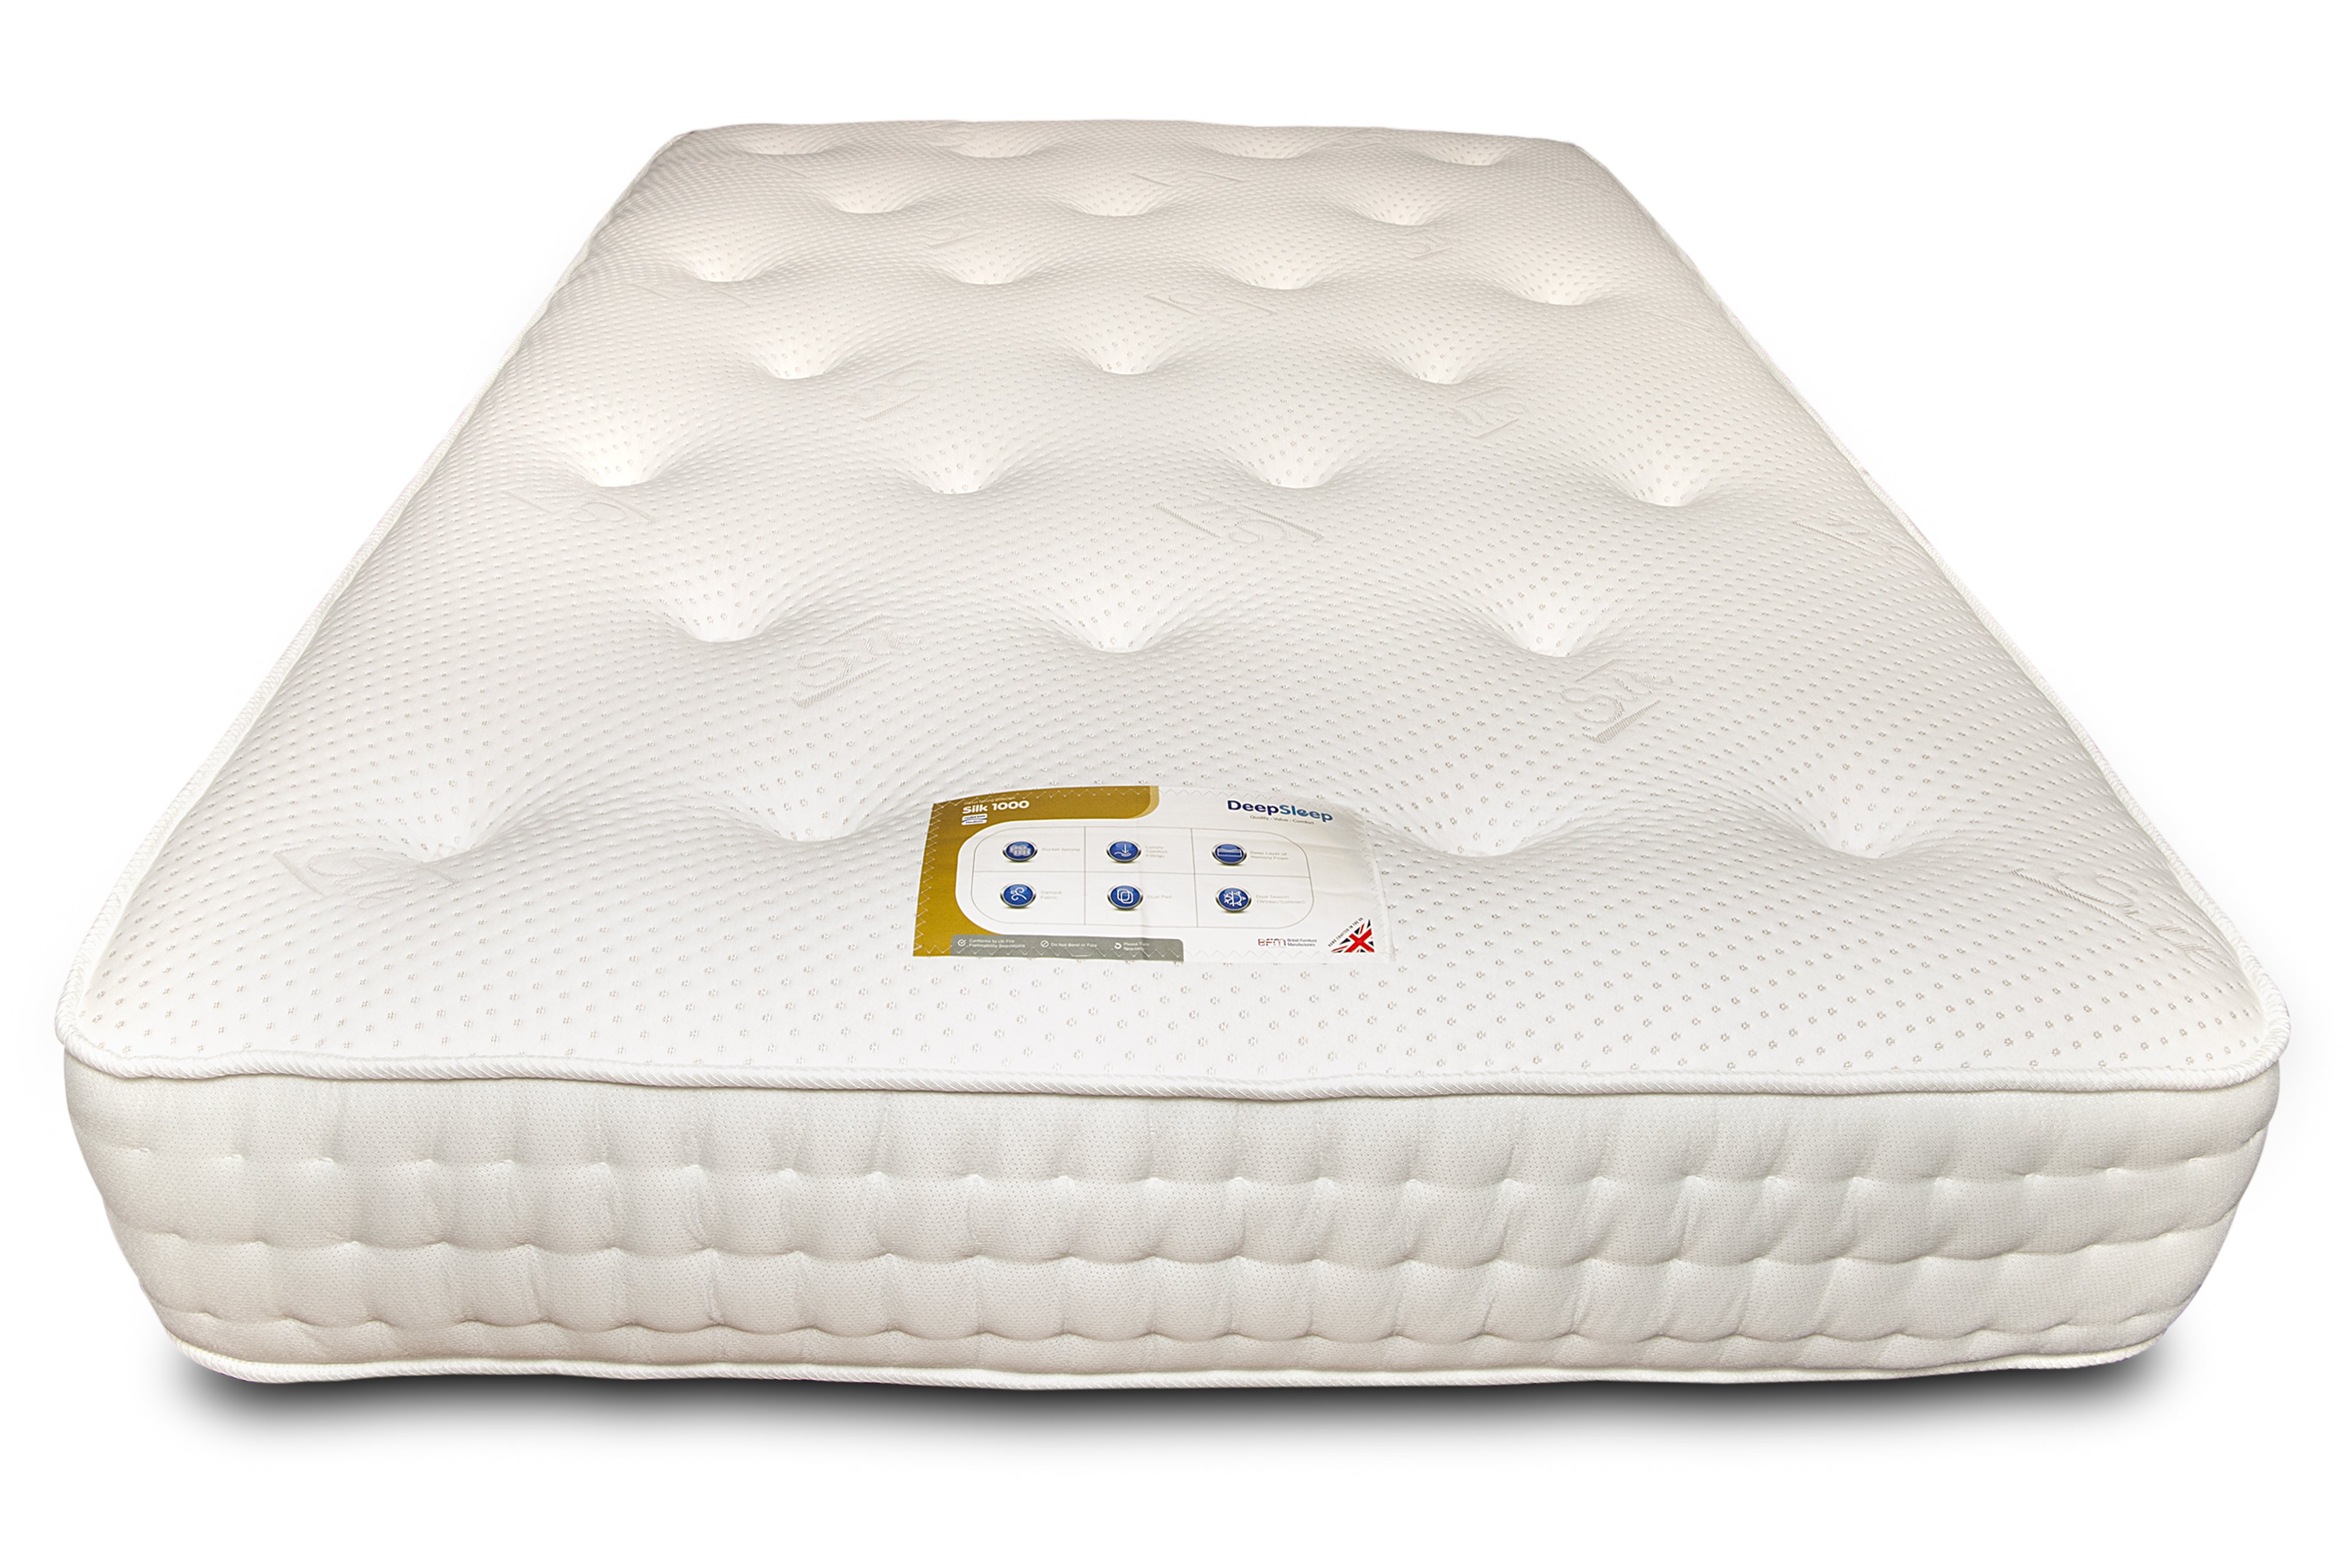 silk mattress pad cover